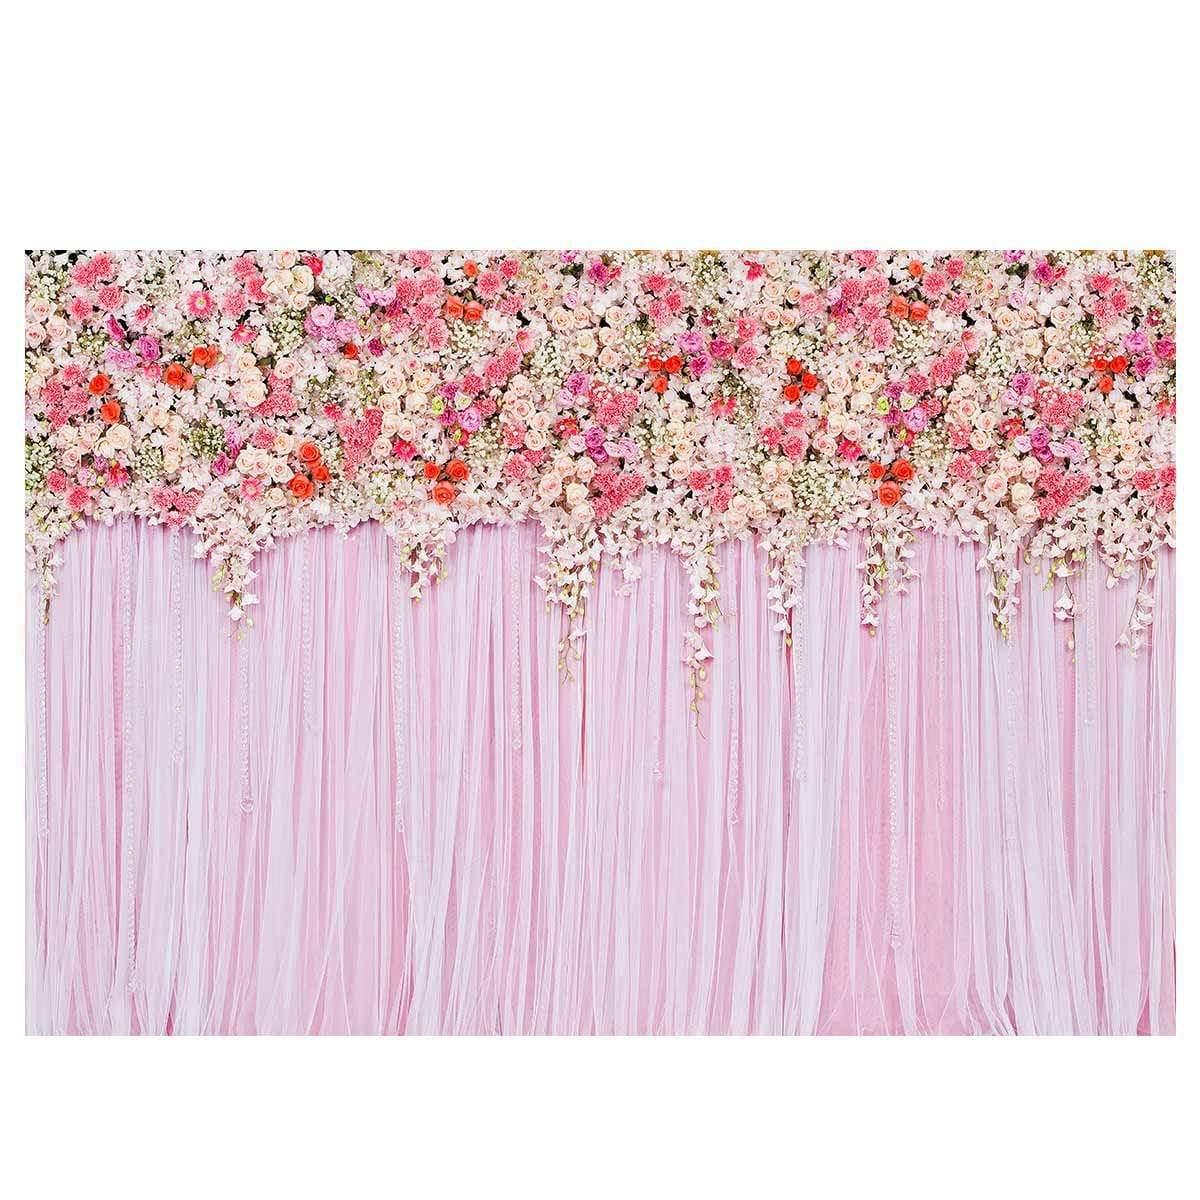 Allenjoy for Photo Studio Floral Backdrop Pink Curtain Flower for Wedding Valentine - Allenjoystudio